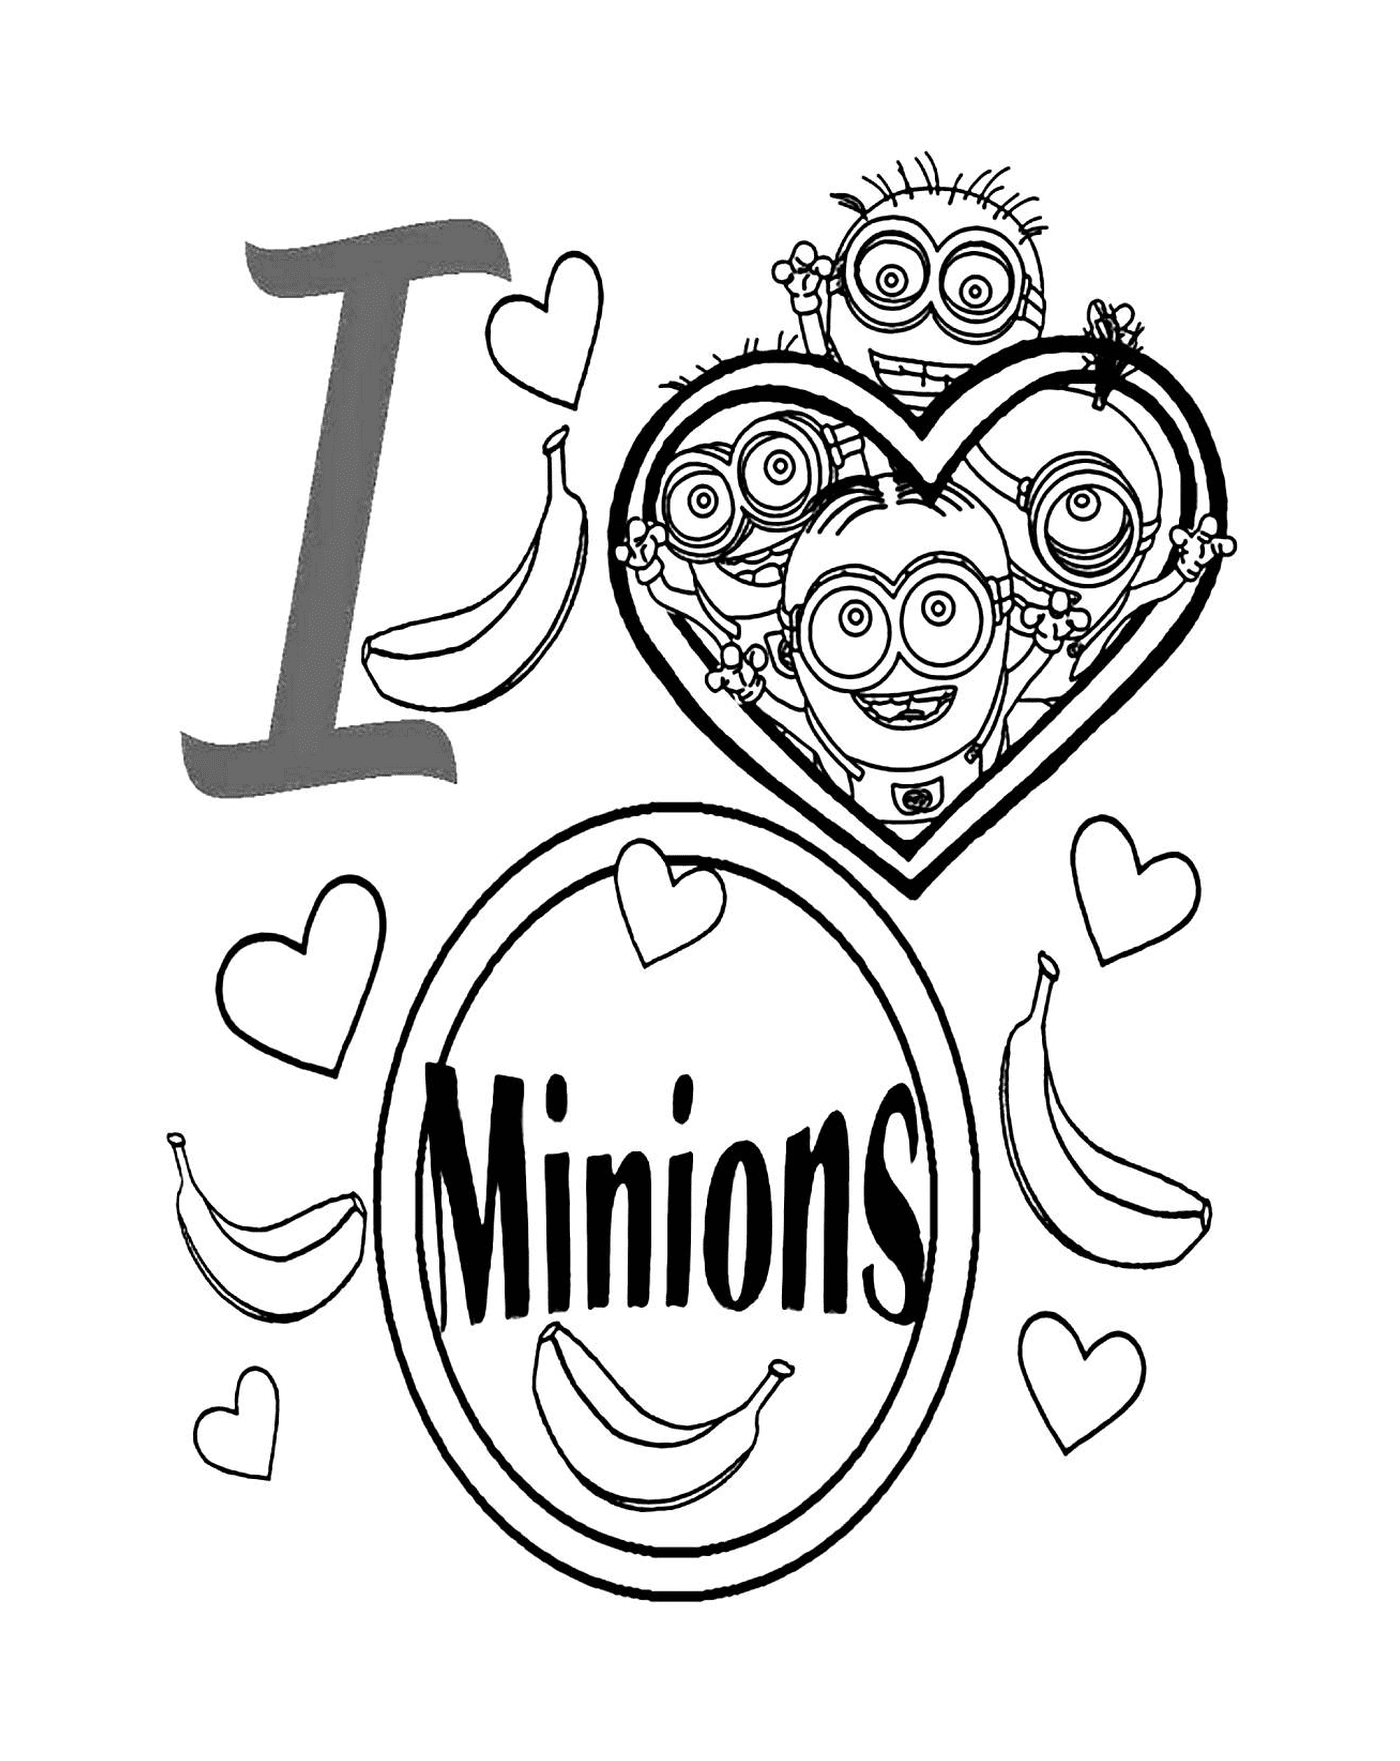  I love Minions! 